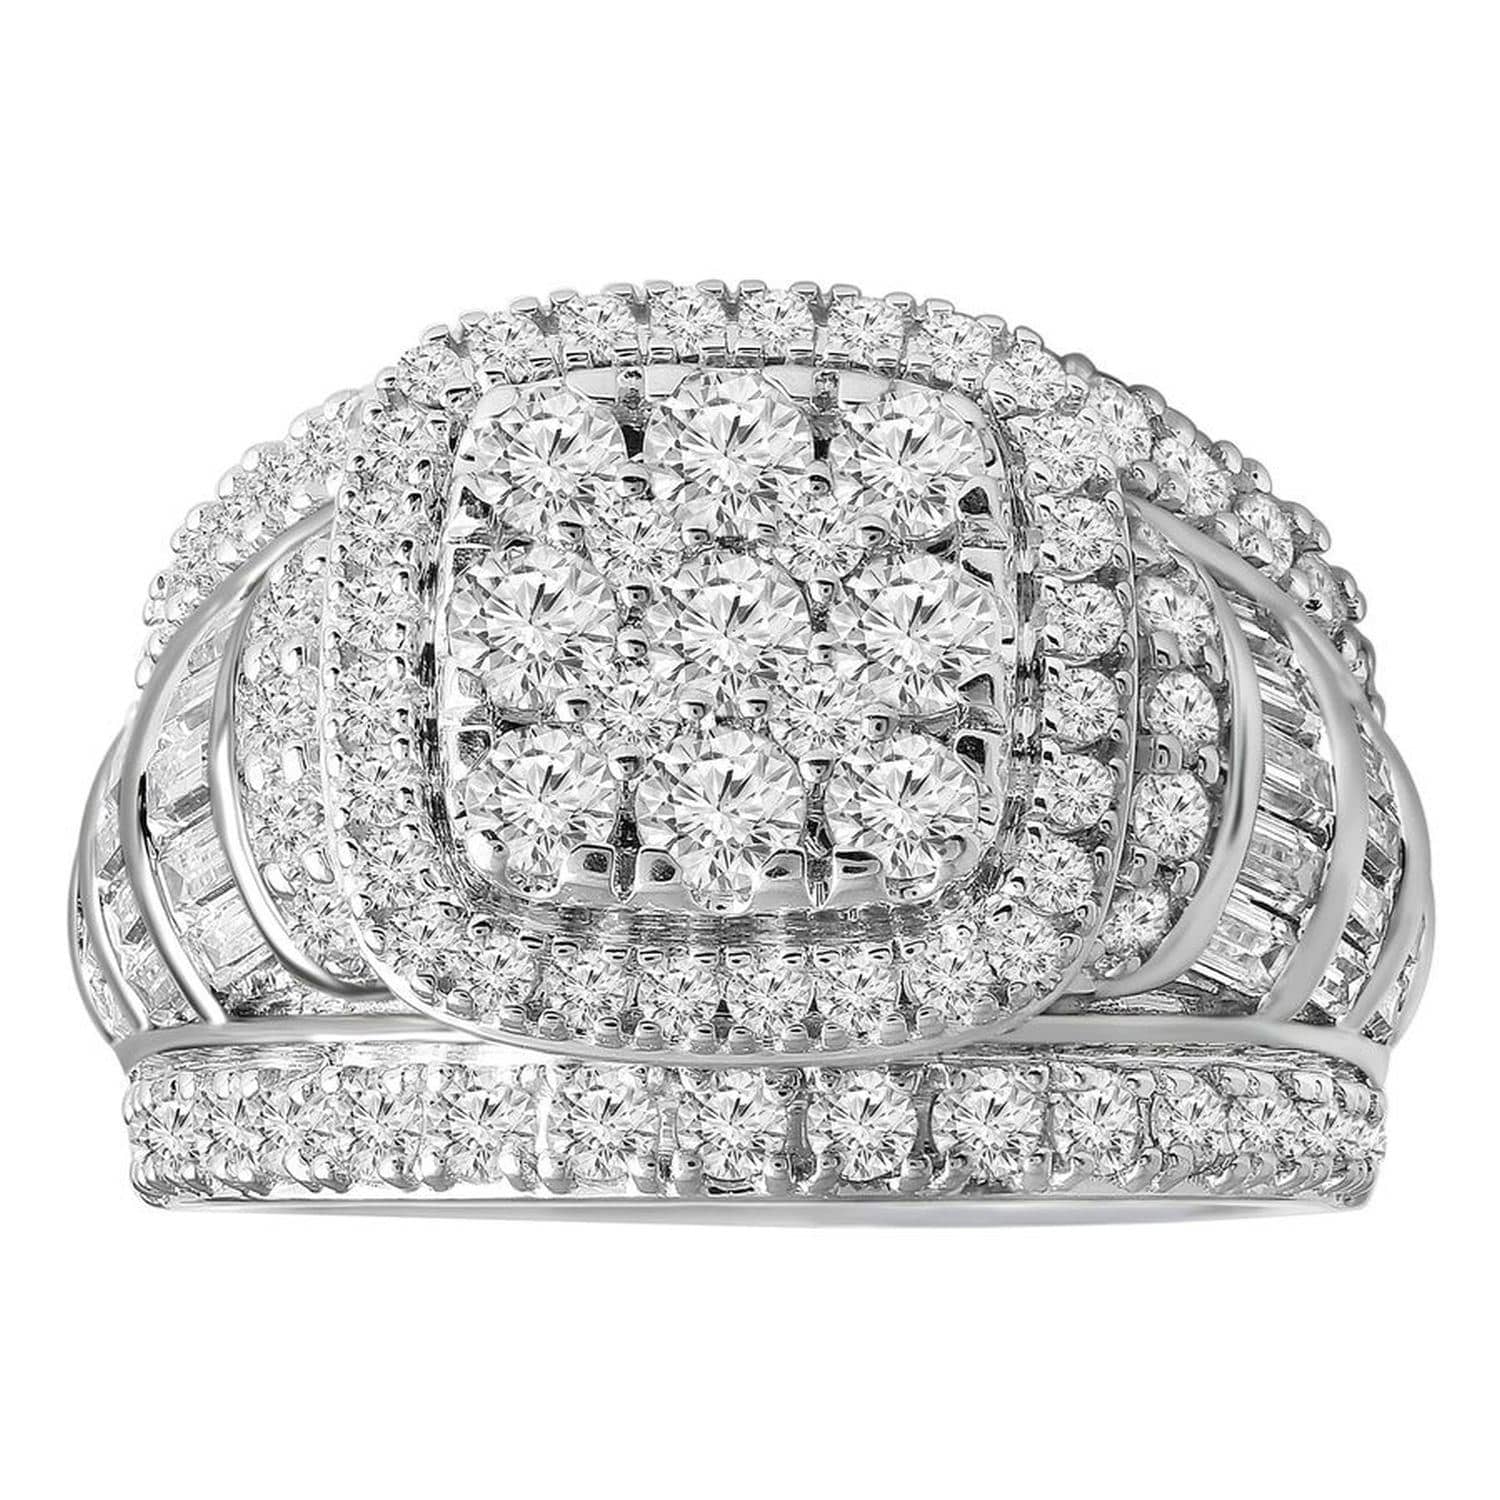 0012501_ladies-ring-1-ct-roundbaguette-diamond-10k-white-gold.jpeg